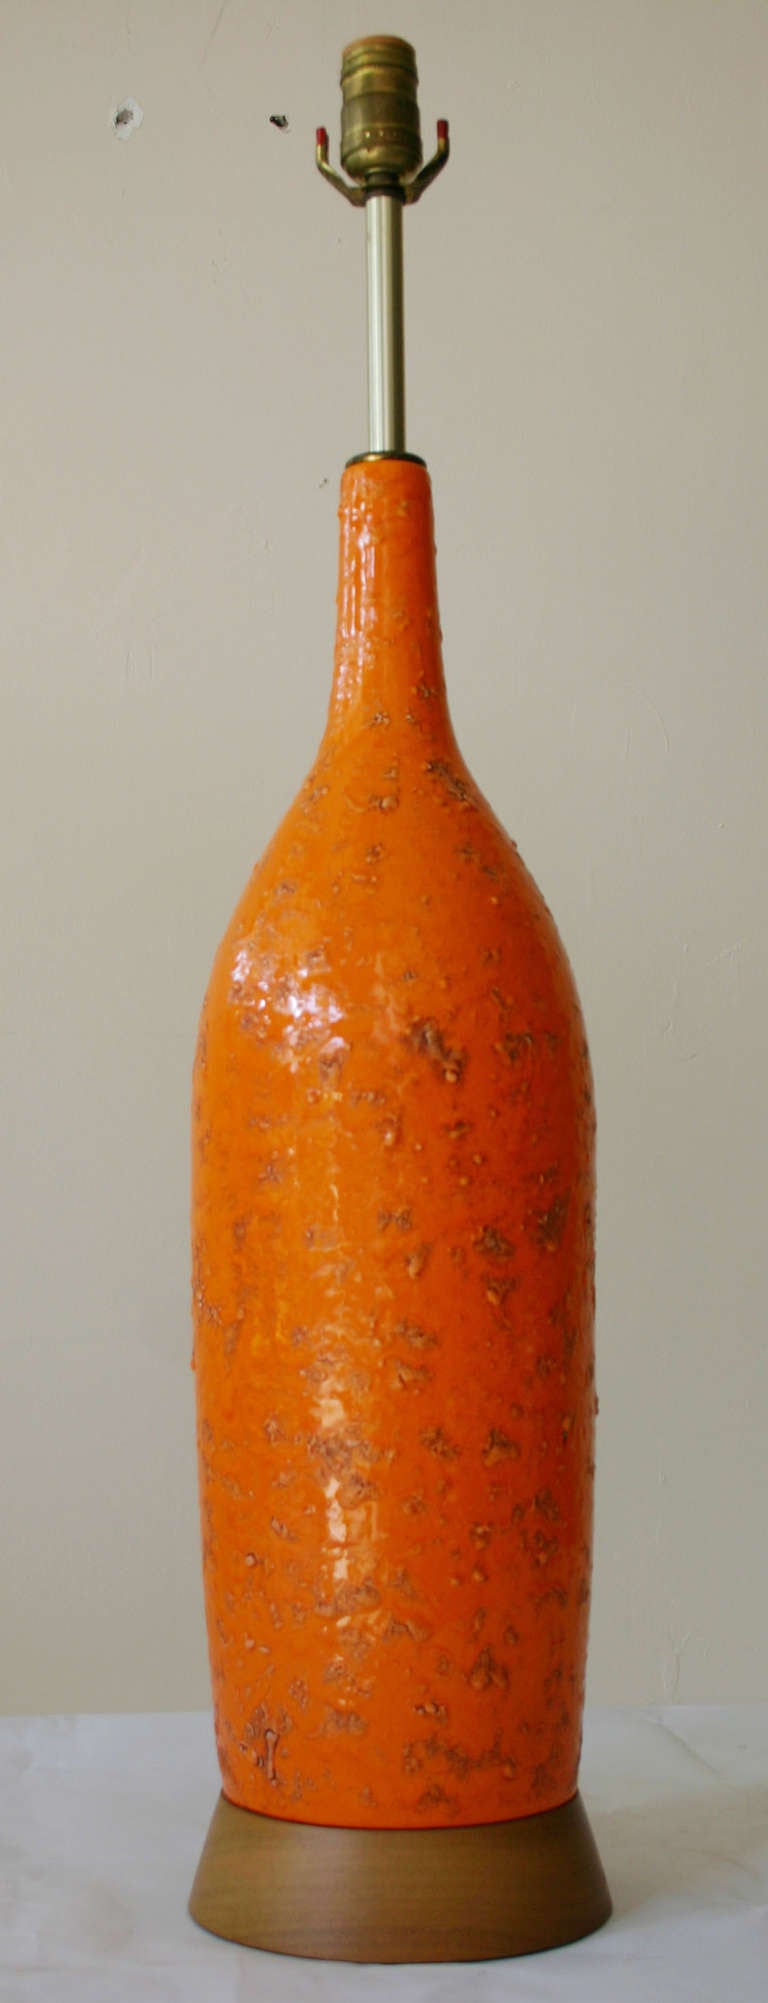 Tall, orange volcanic glazed ceramic lamp with walnut base, attibuted to Fantoni.